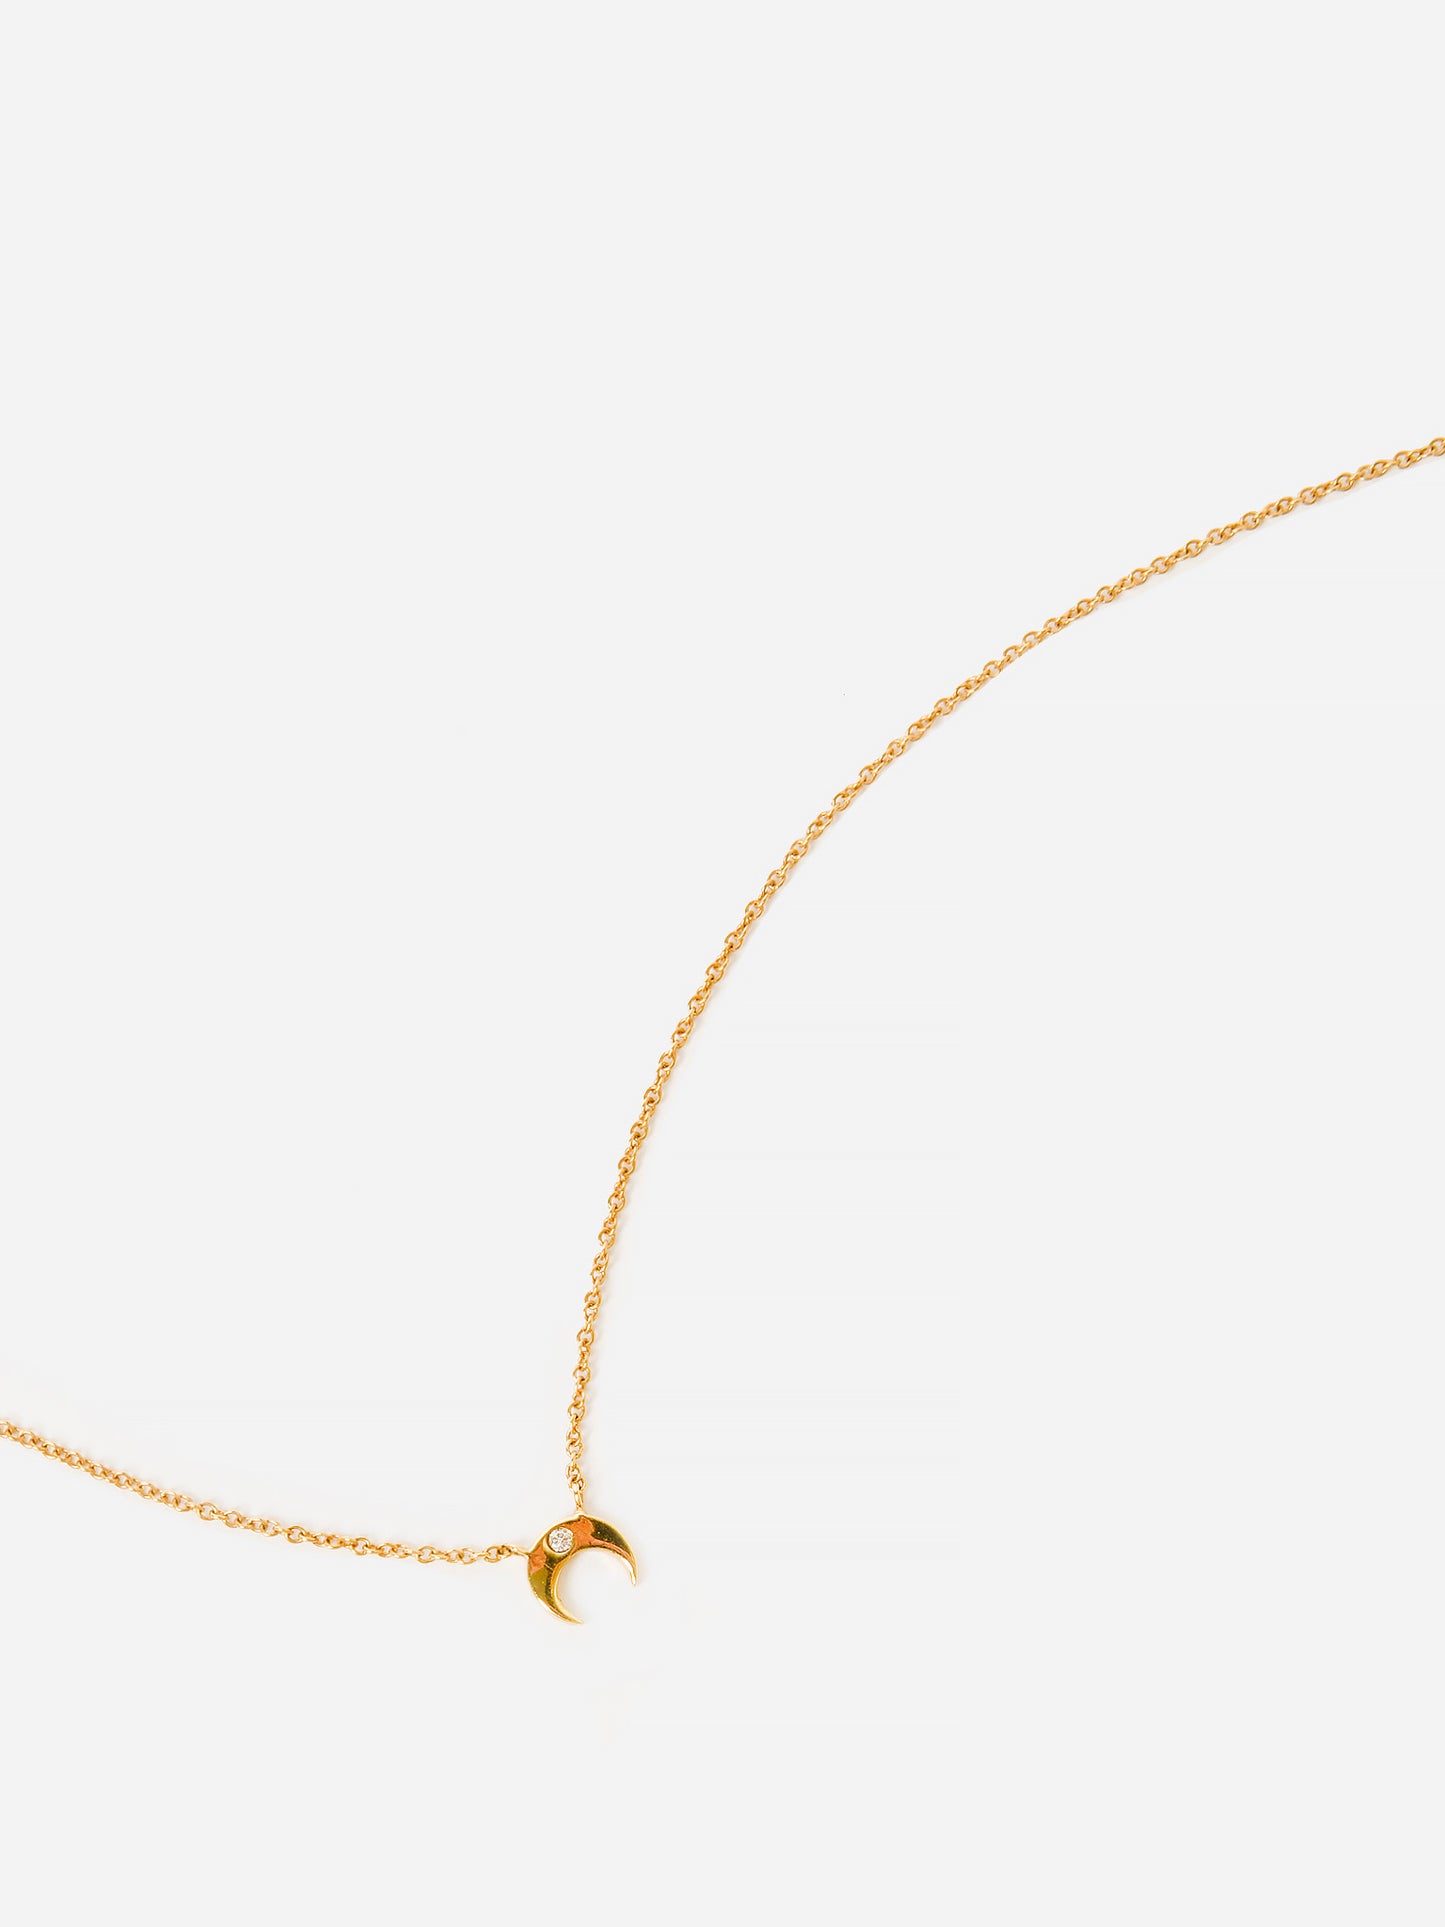 S. Bell Women's Diamond Horn Necklace